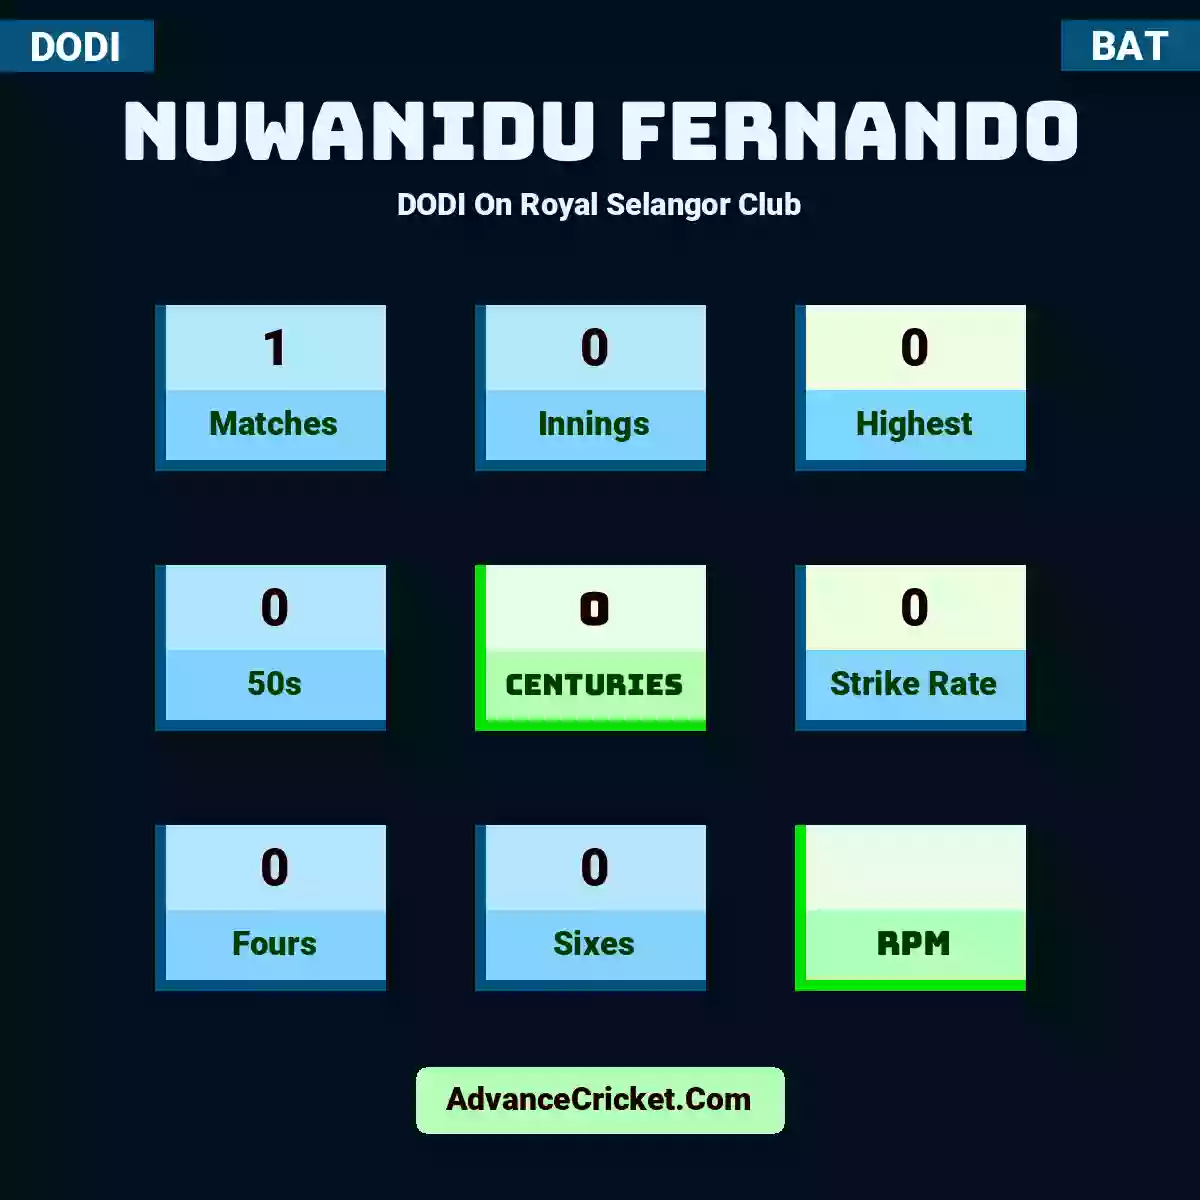 Nuwanidu Fernando DODI  On Royal Selangor Club, Nuwanidu Fernando played 1 matches, scored 0 runs as highest, 0 half-centuries, and 0 centuries, with a strike rate of 0. N.Fernando hit 0 fours and 0 sixes.